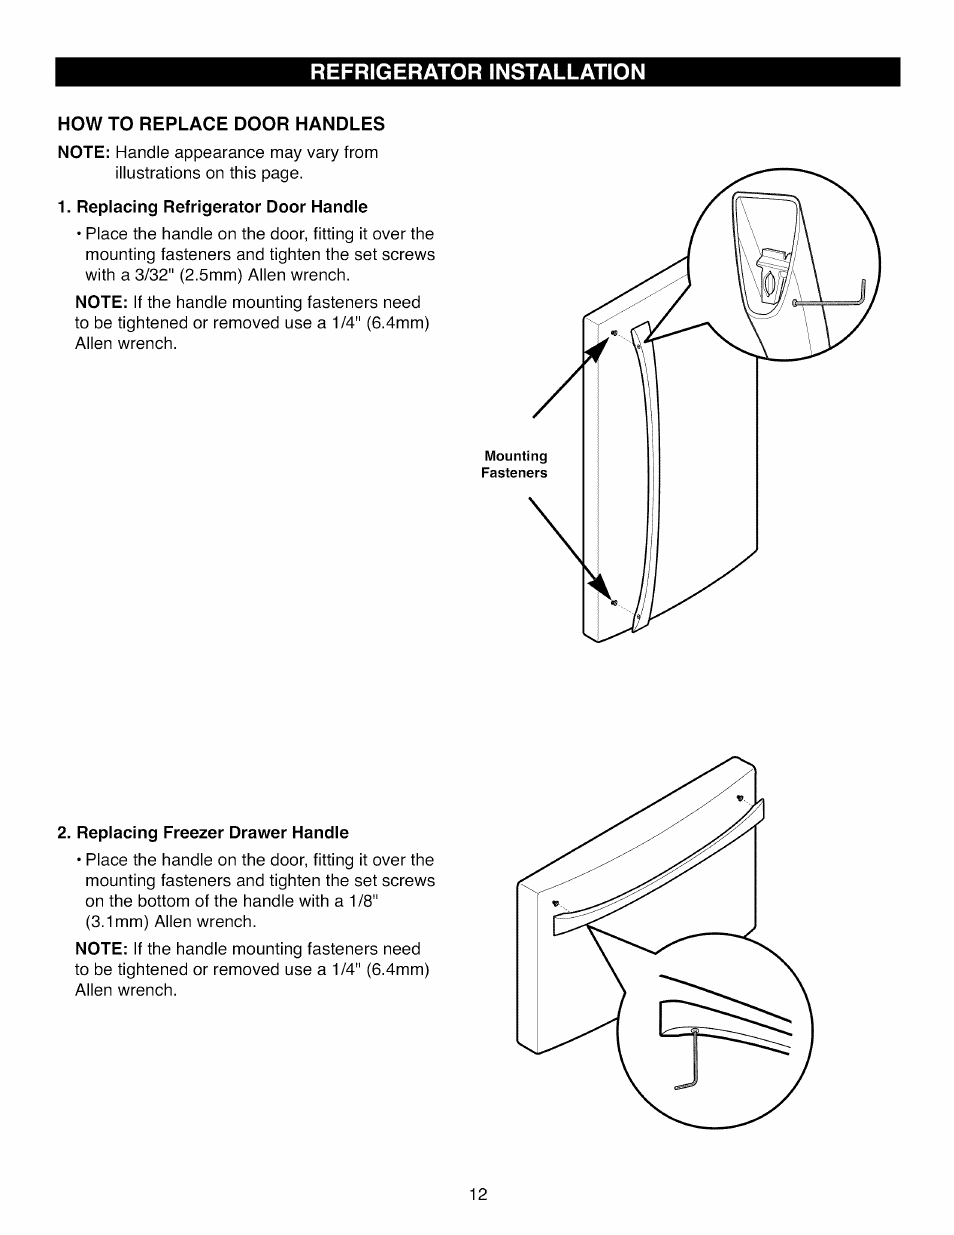 How To Replace Door Handles Replacing Refrigerator Door Handle Replacing Freezer Drawer Handle Kenmore Elite 795 7104 User Manual Page 12 36